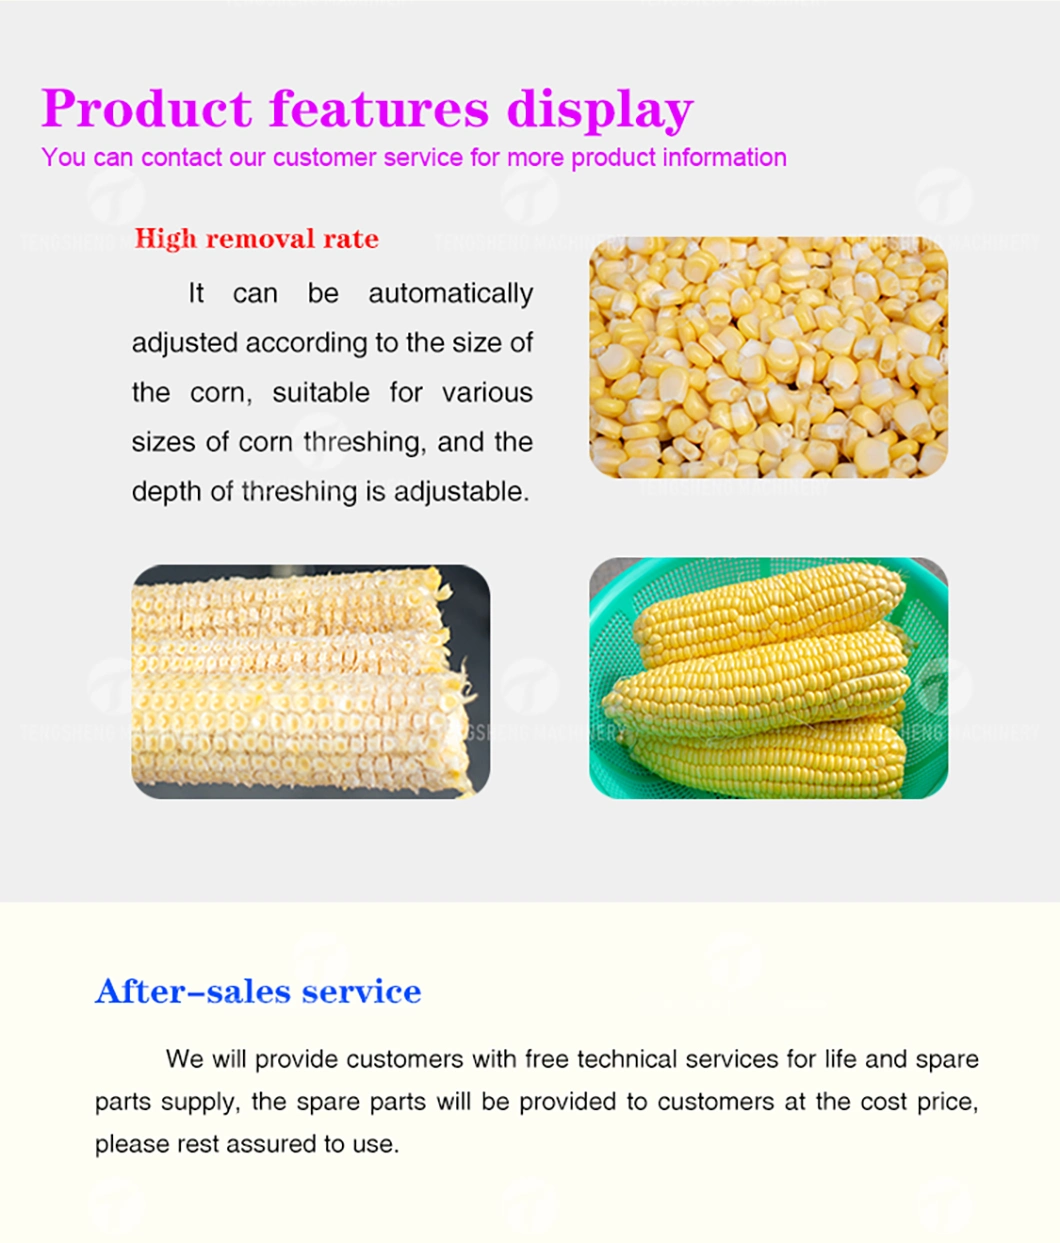 Tengsheng Low Price Corn Threshing Equipment Fresh Corn Sheller Sweet Corn Thresher (TS-W168L)